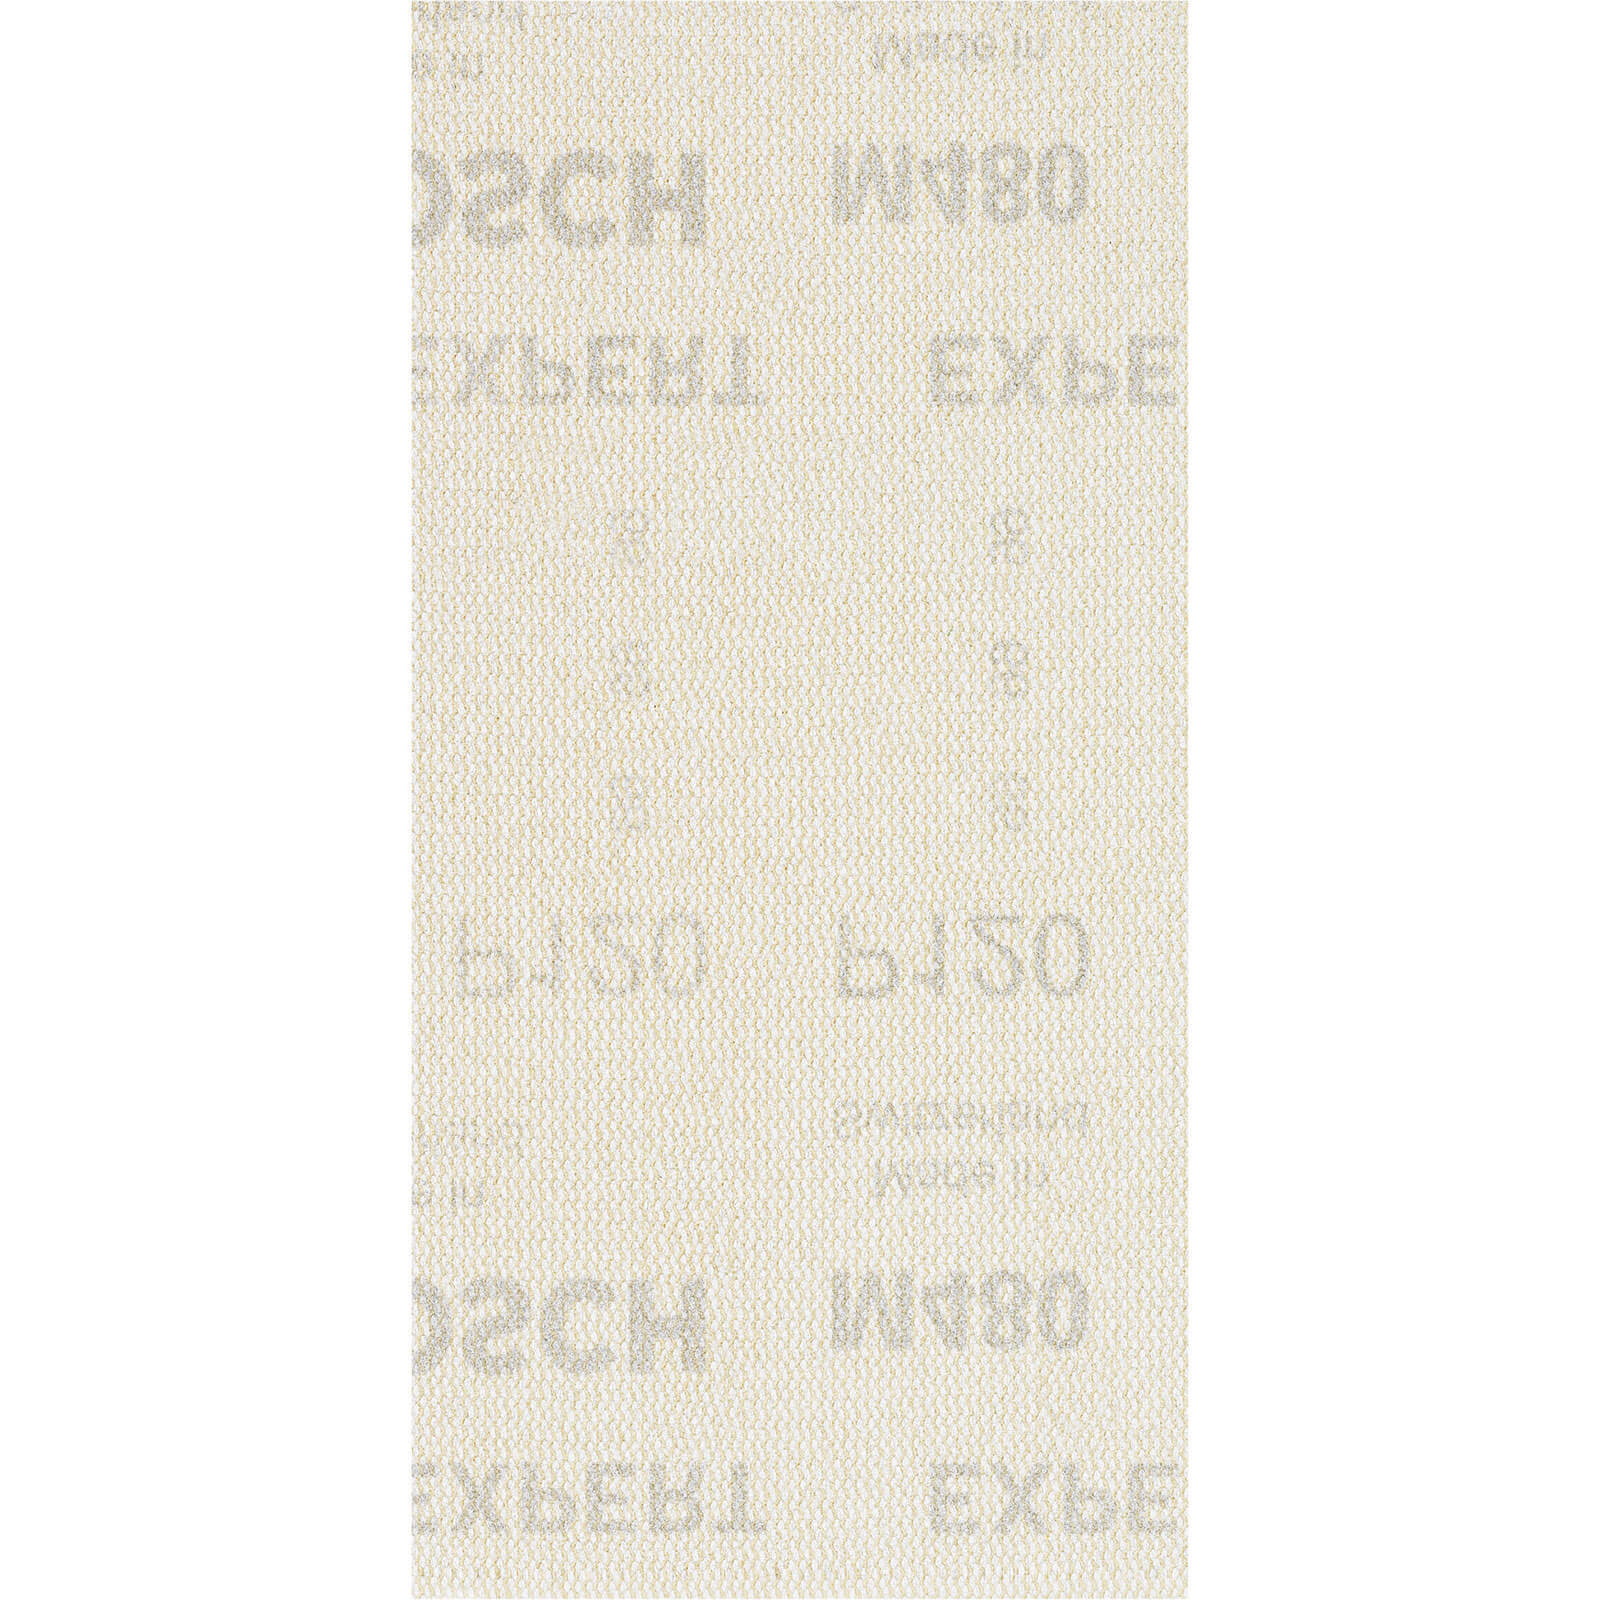 Image of Bosch Expert M480 93mm x 186mm Net Abrasive Sanding Sheets 93mm x 186mm 120g Pack of 50